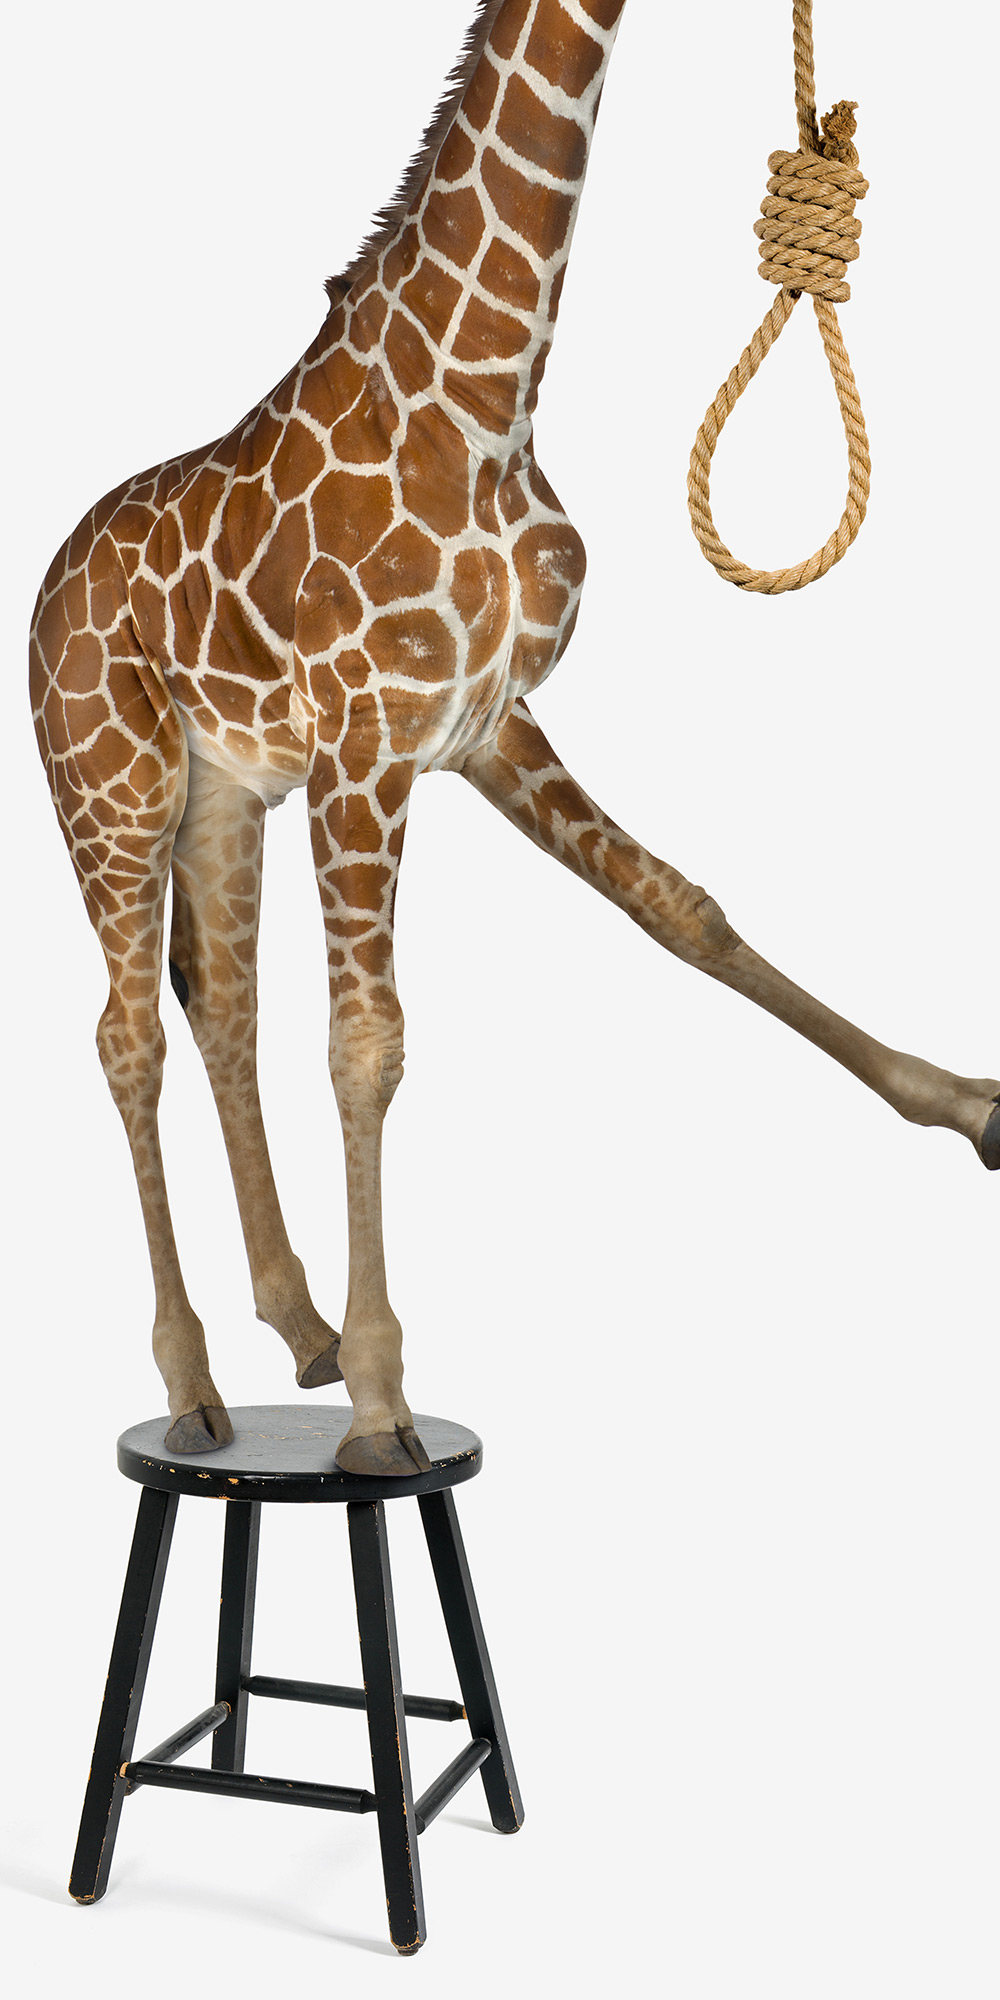 Jeff Kern design for "Suicide Giraffe"